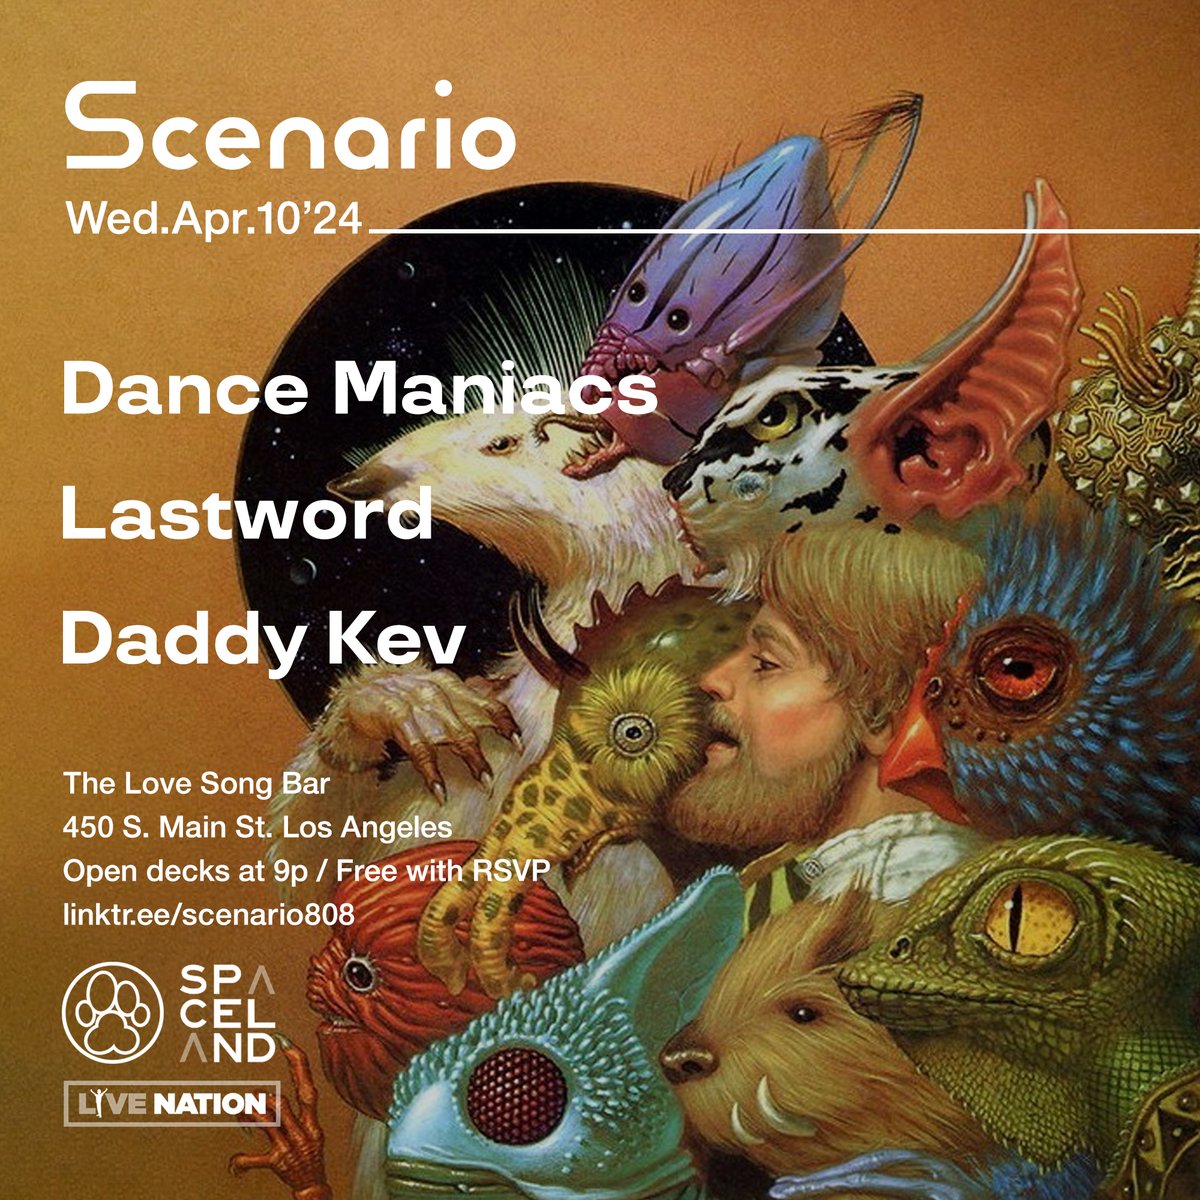 Tomorrow 4/10: Scenario 2024 Special Edition with #DanceManiacs @__liano @AviLoud #OakCitySlums #Lastword + @daddykev at @TheLoveSongBar. Open decks at 9p. Free with RSVP. Presented by @ALPHAPUP @SpacelandLA @LiveNation 🔊✨❤️ eventbrite.com/e/scenario-dan…